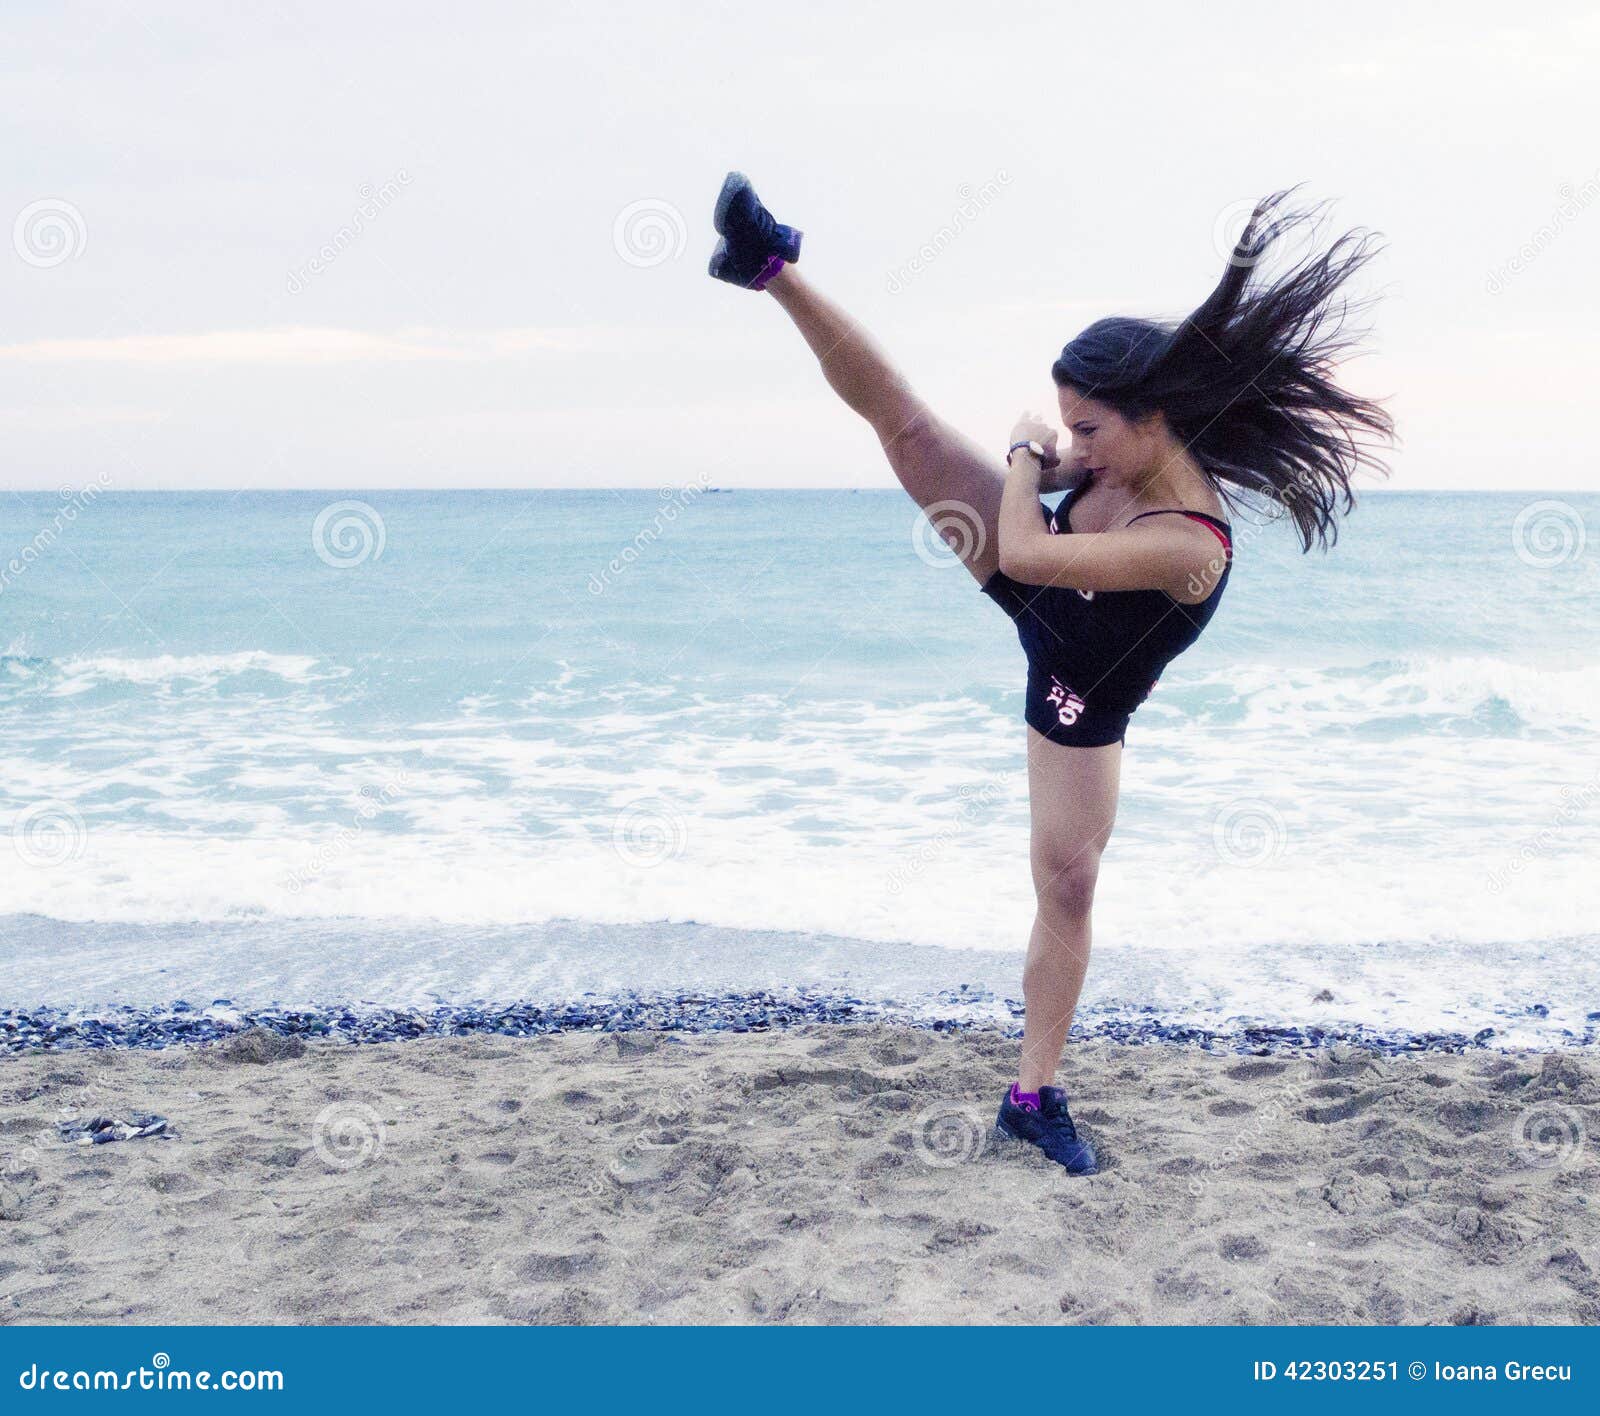 woman performing a high kick